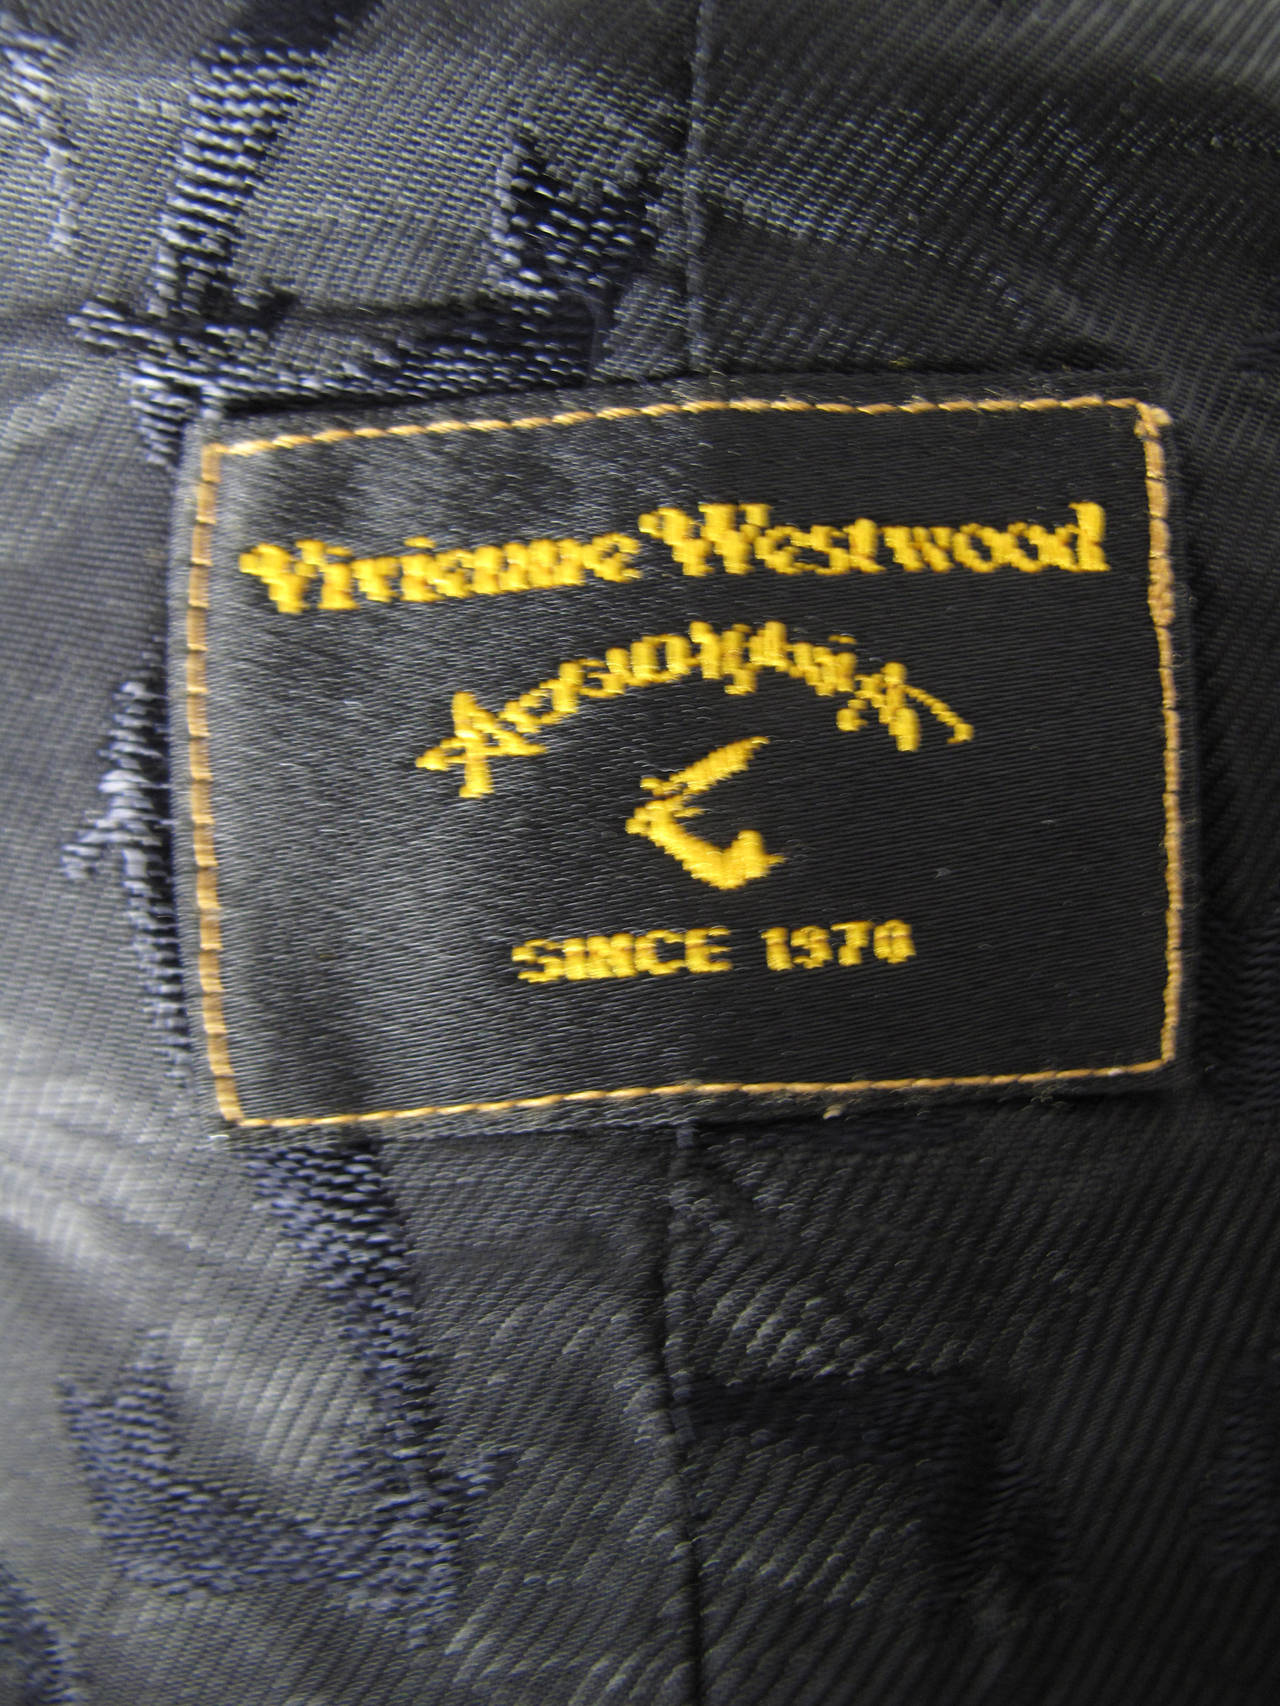 Vivienne Westwood Anglomania Striped Vest 1